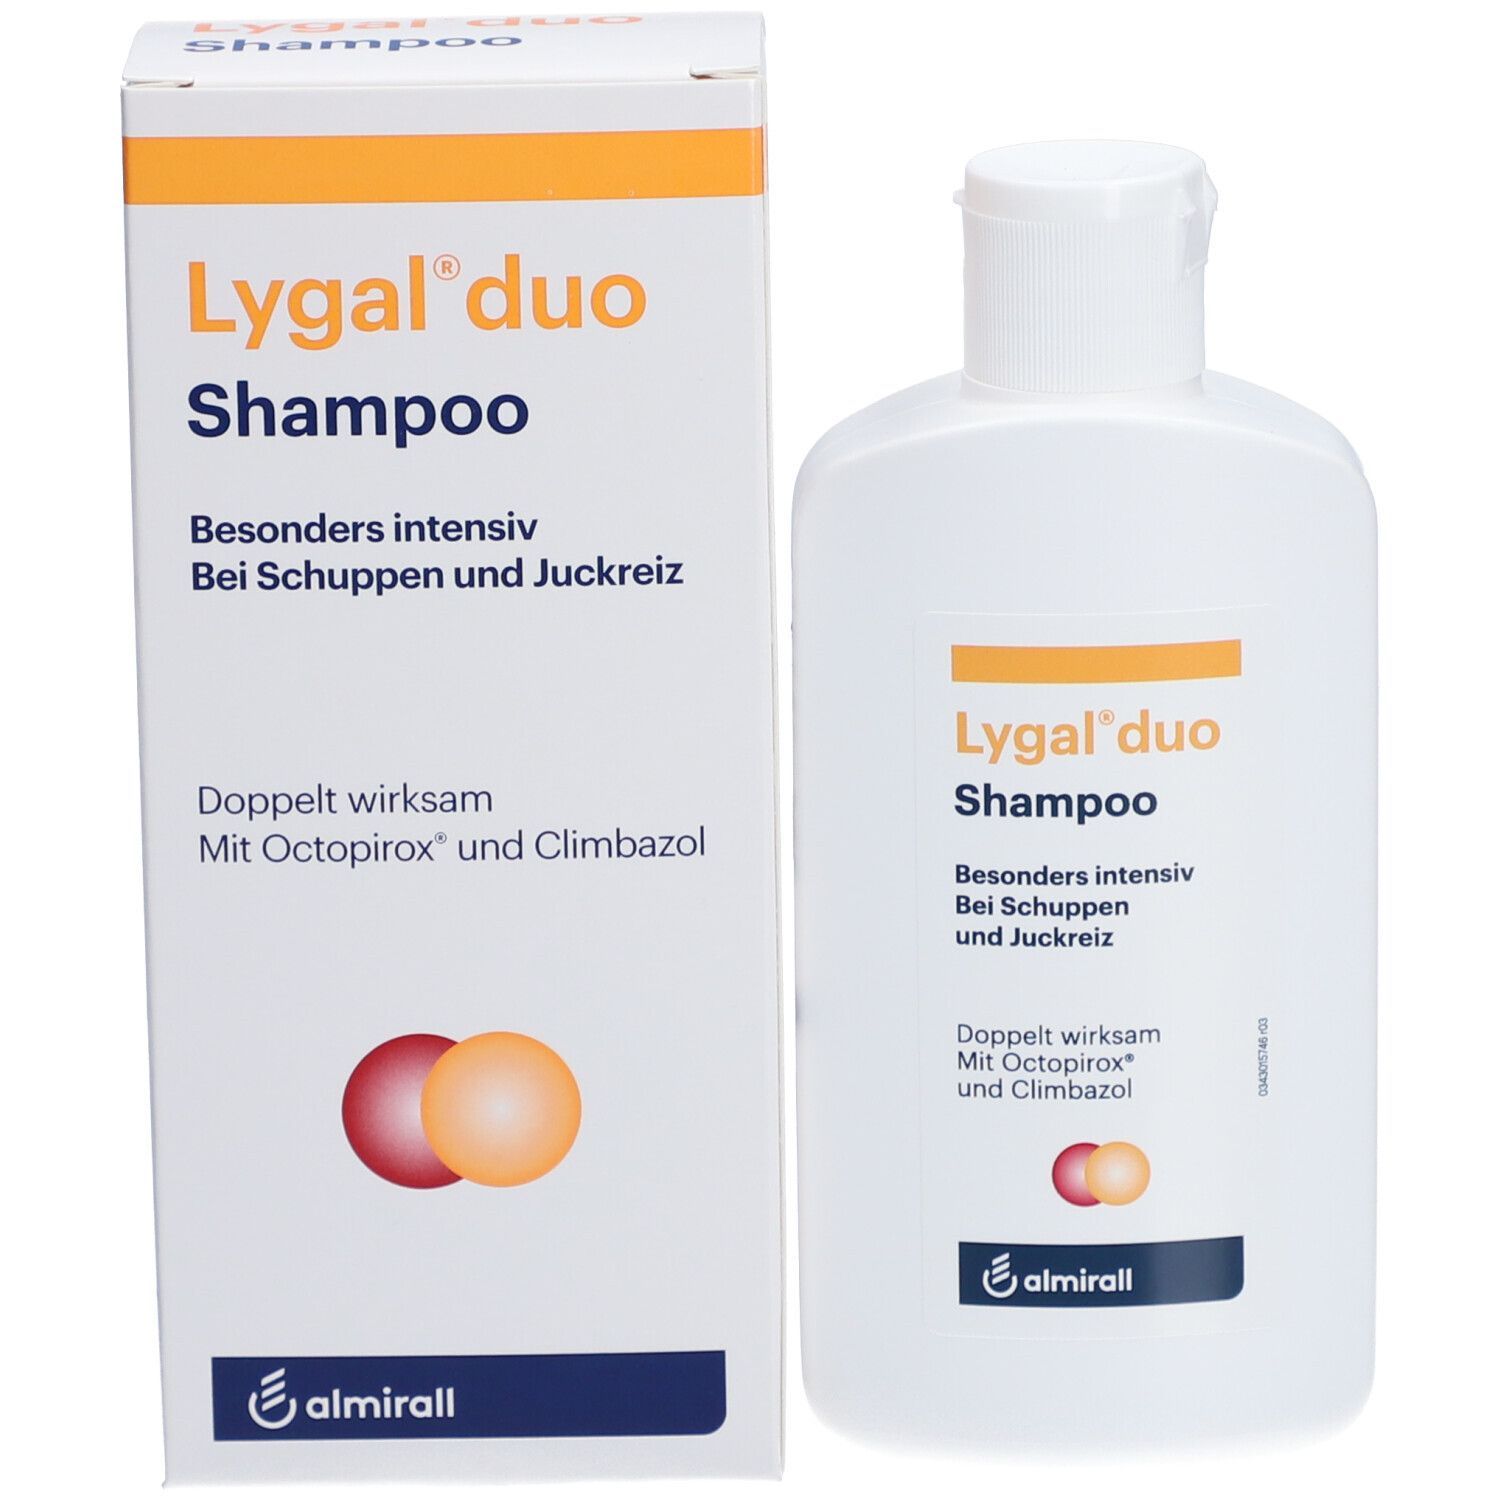 Lygal® duo SHAMPOO